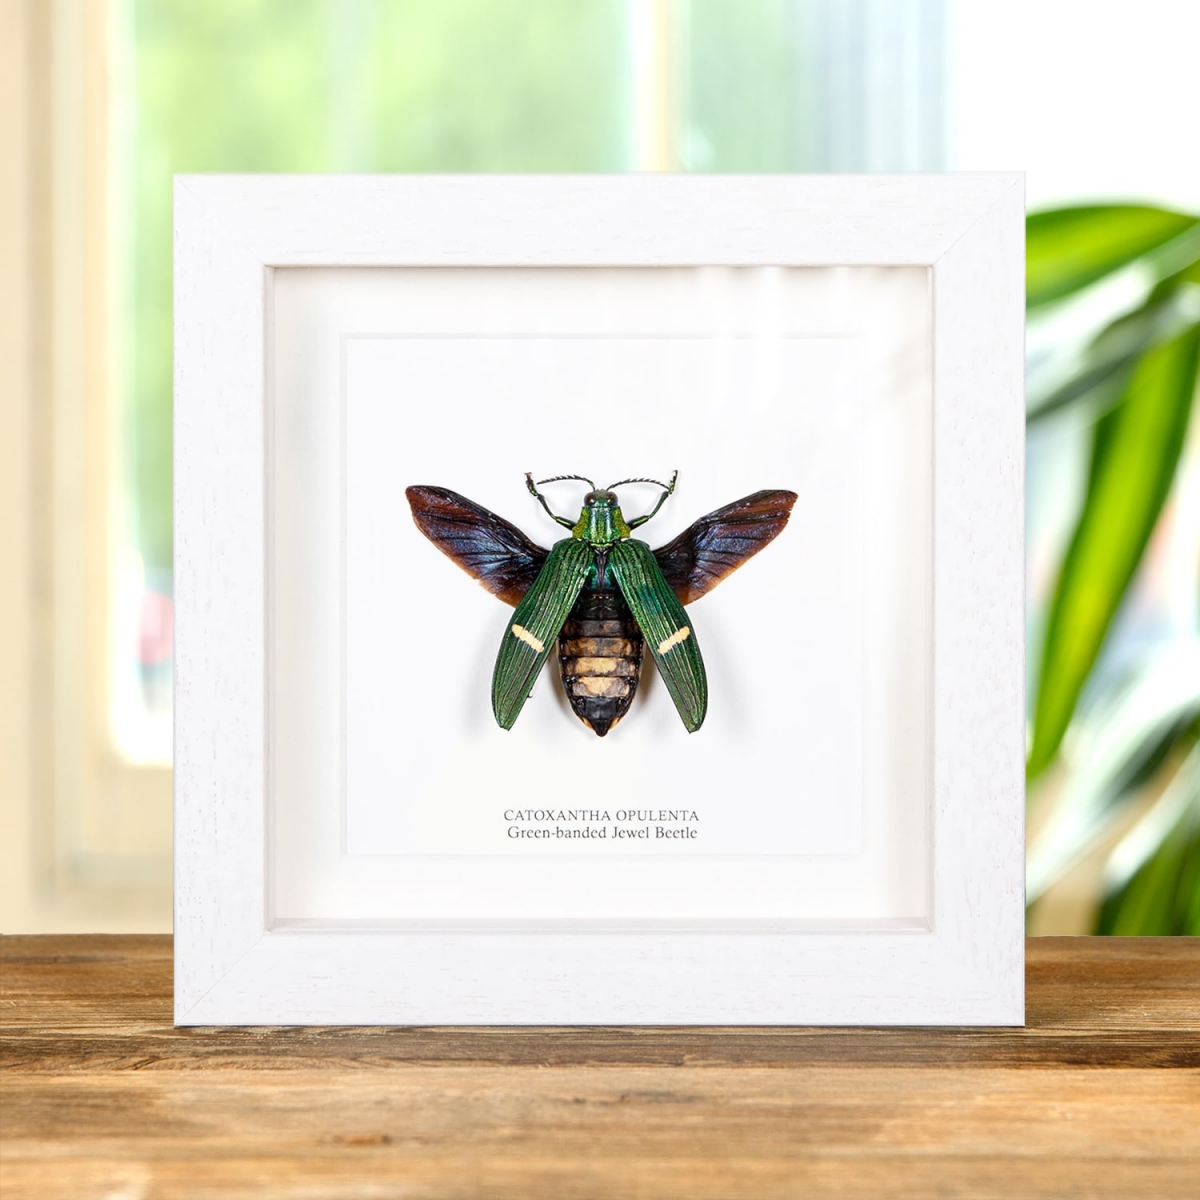 Green-banded Jewel Beetle In Box Frame (Catoxantha opulenta)